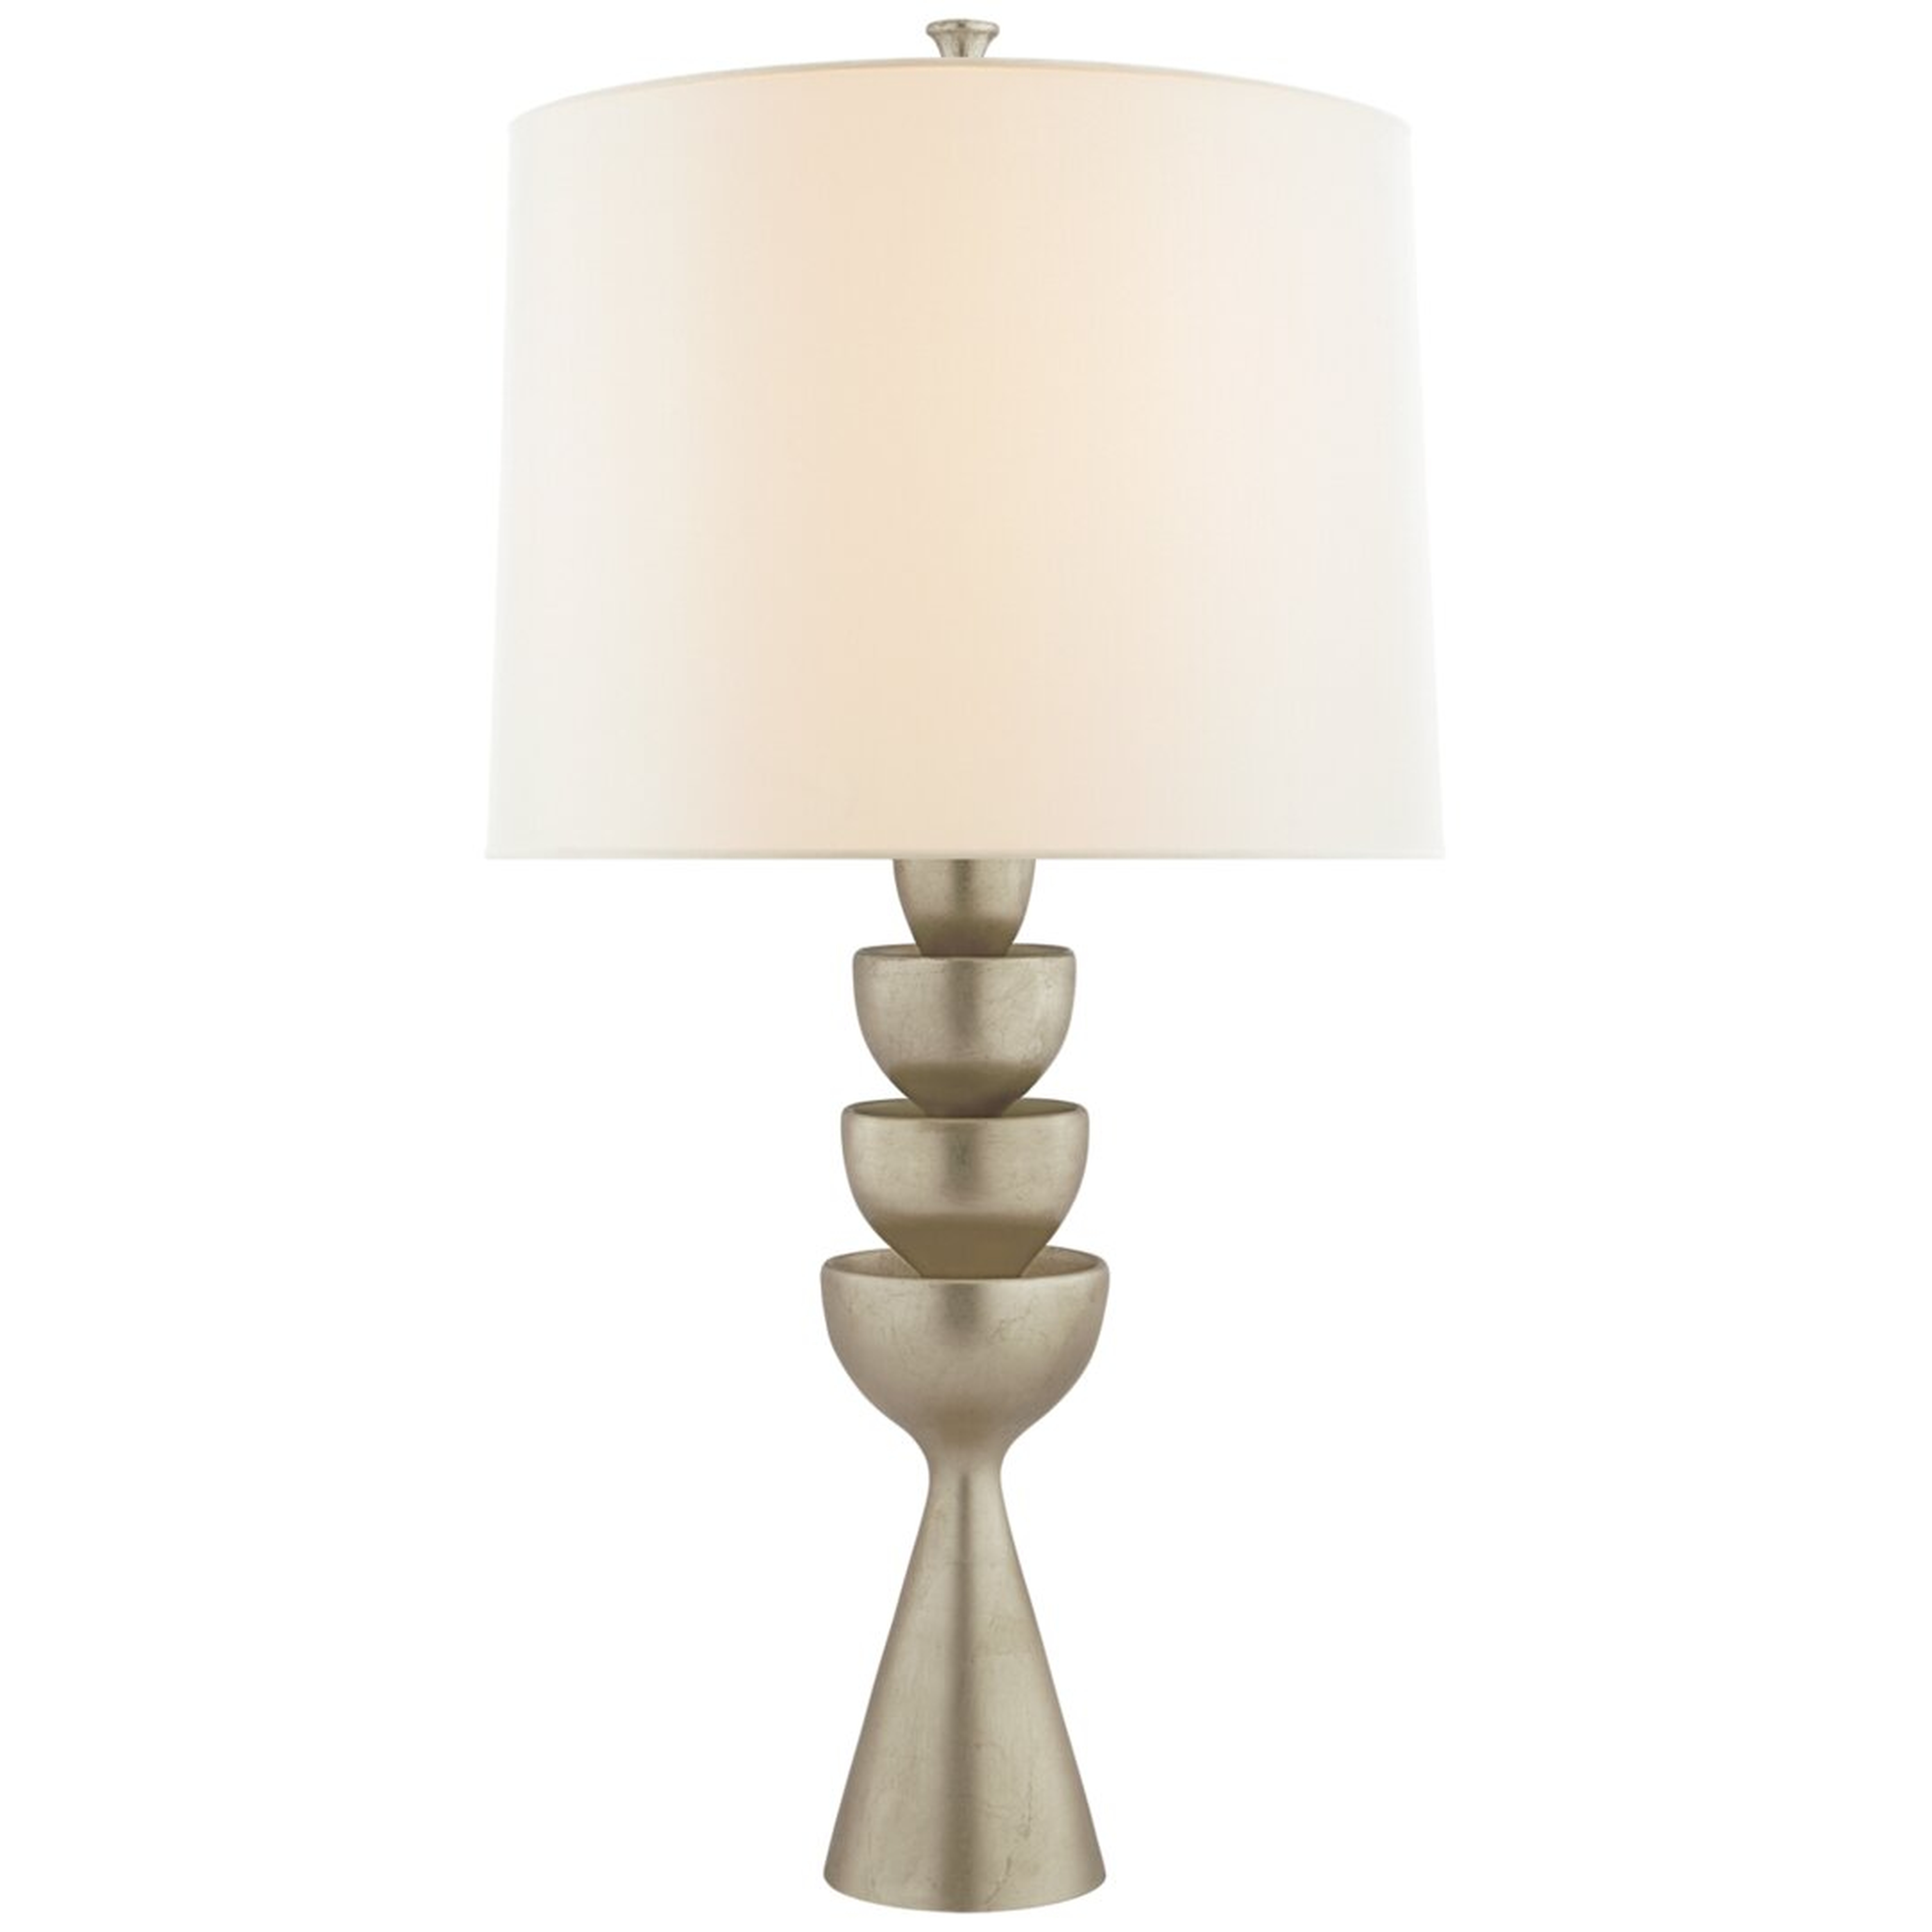 "Visual Comfort Veranna Large Table Lamp by AERIN" - Perigold